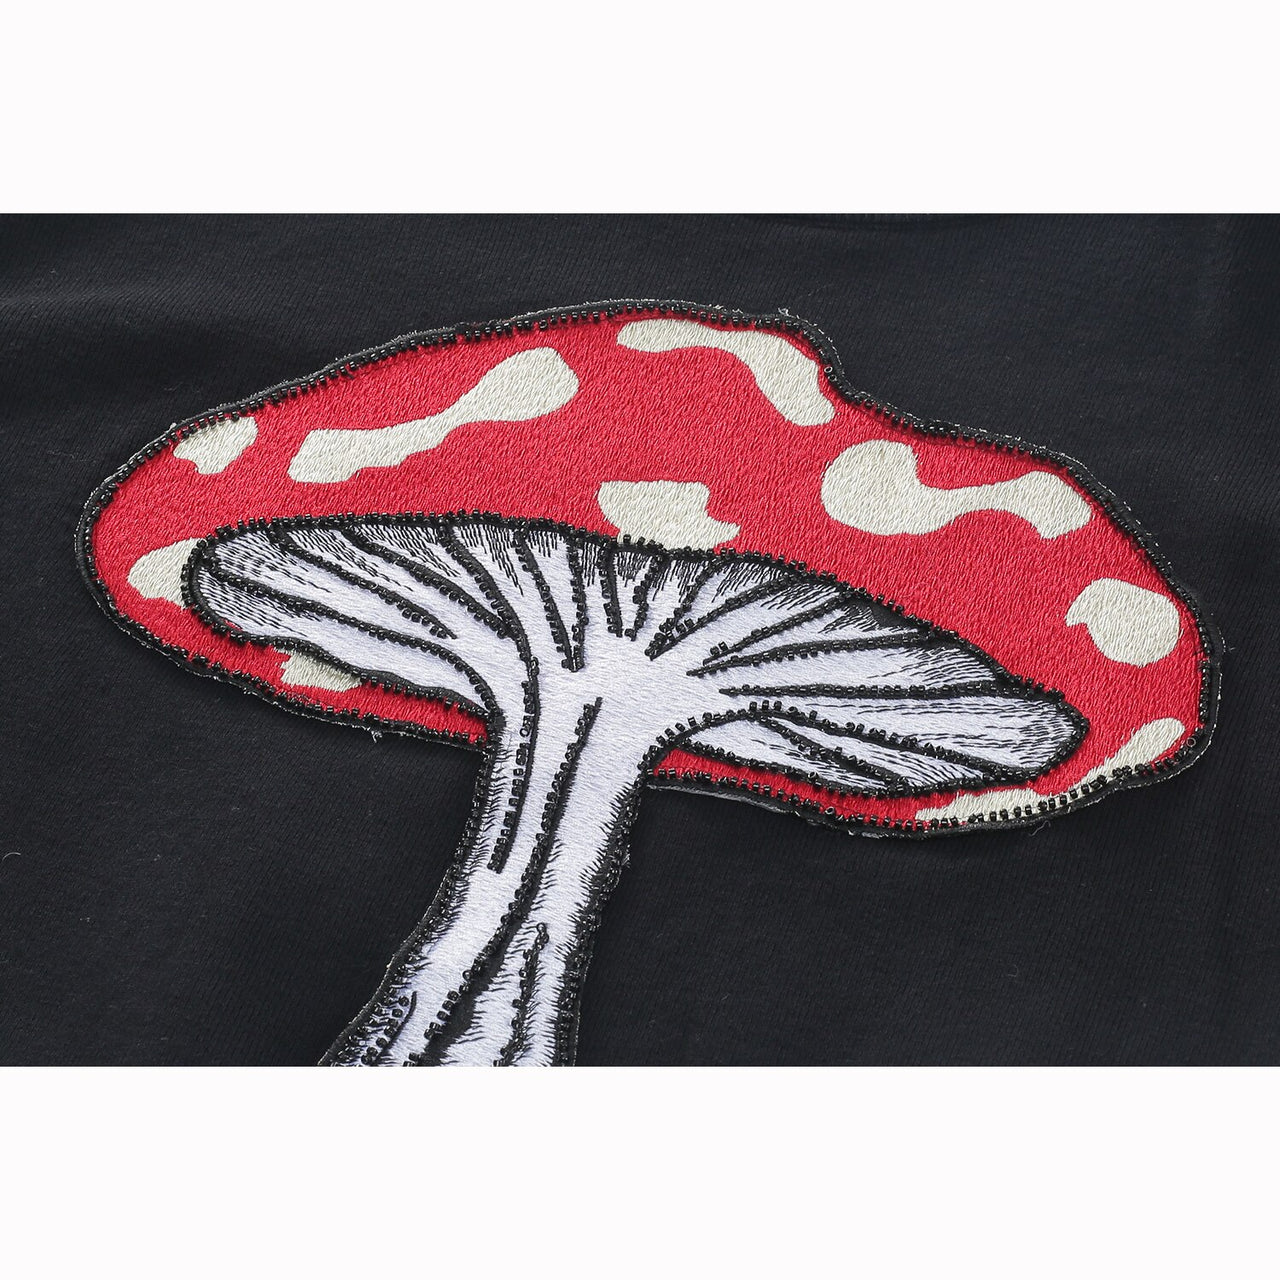 Thick Mushroom 3D applique Black Oversize Sweatshirt -